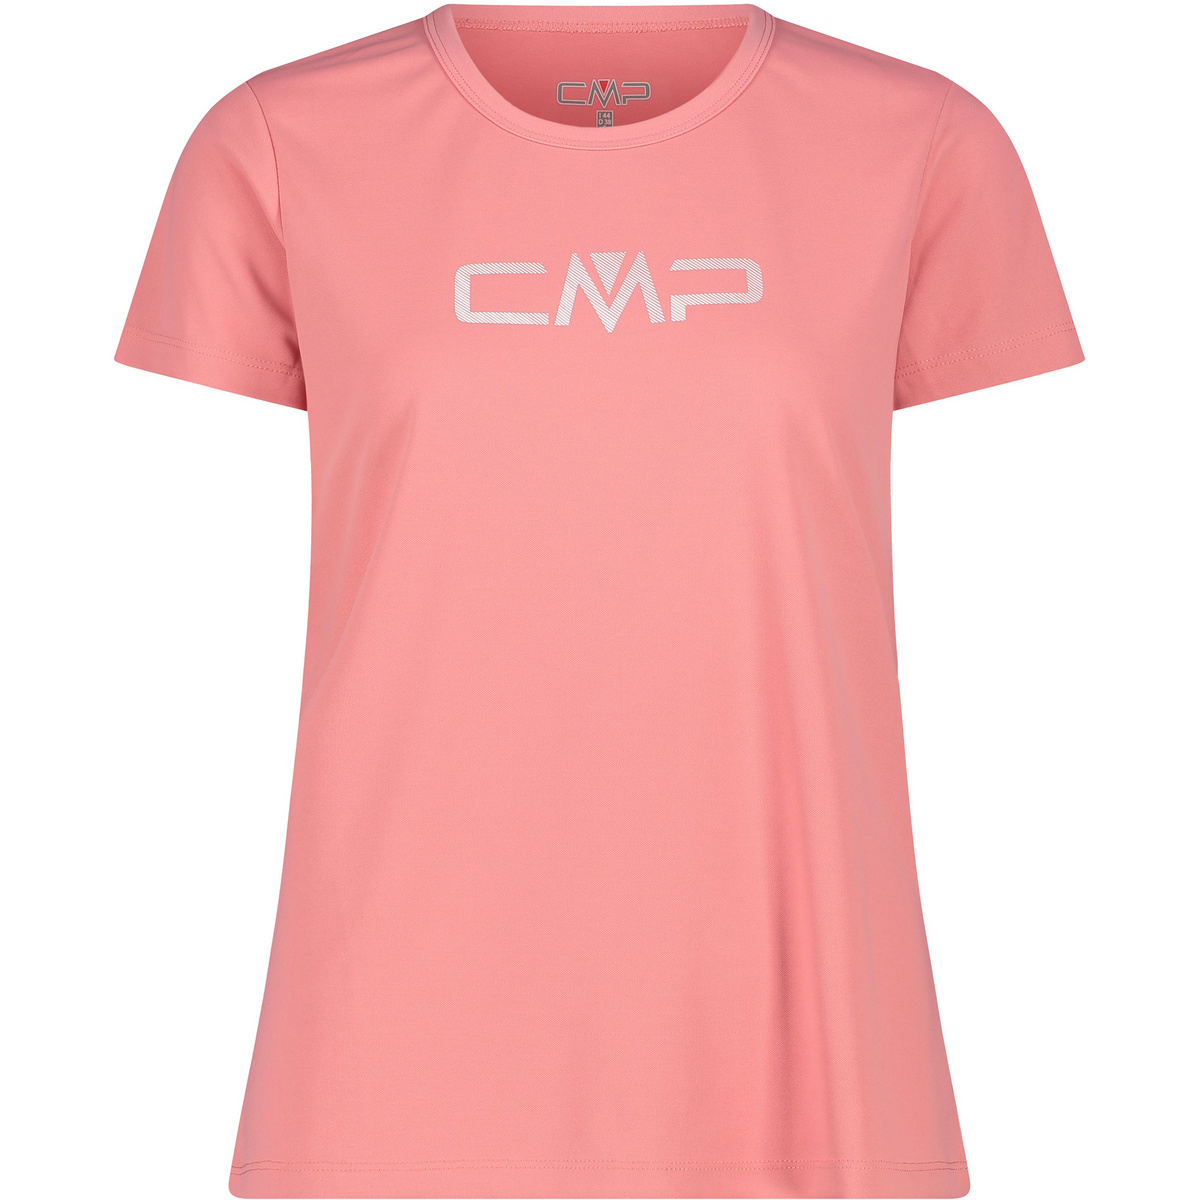 CMP Damen Funktions Print T-Shirt von CMP